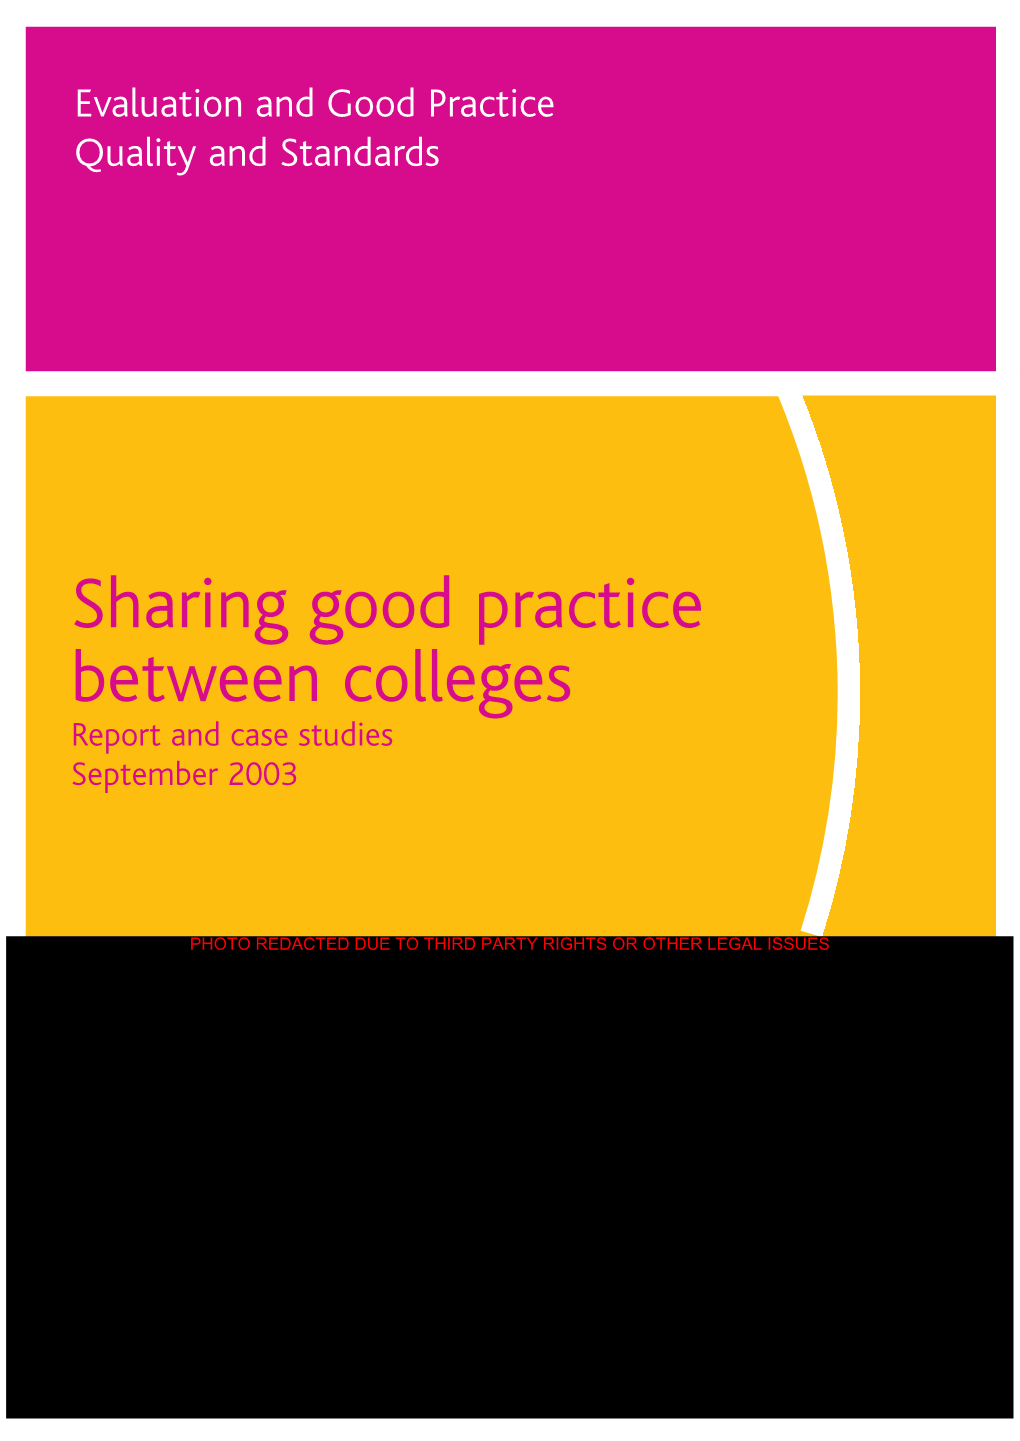 Sharing Good Practice Between Colleges Report and Case Studies September 2003